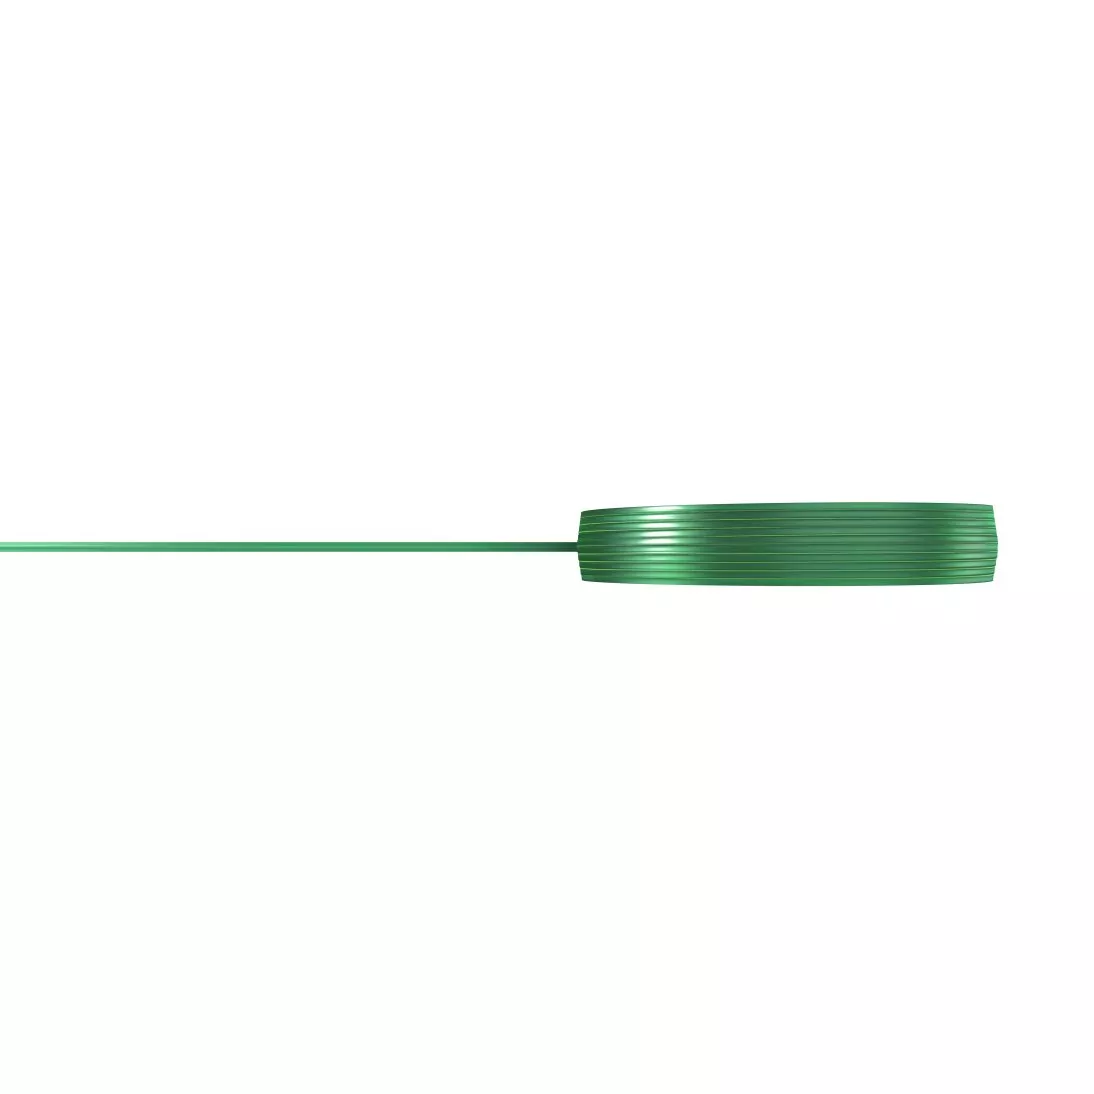 3M™ Finish Line Knifeless Tape KTS-FL1, Green, 3.5 mm x 50 m, 20/Case